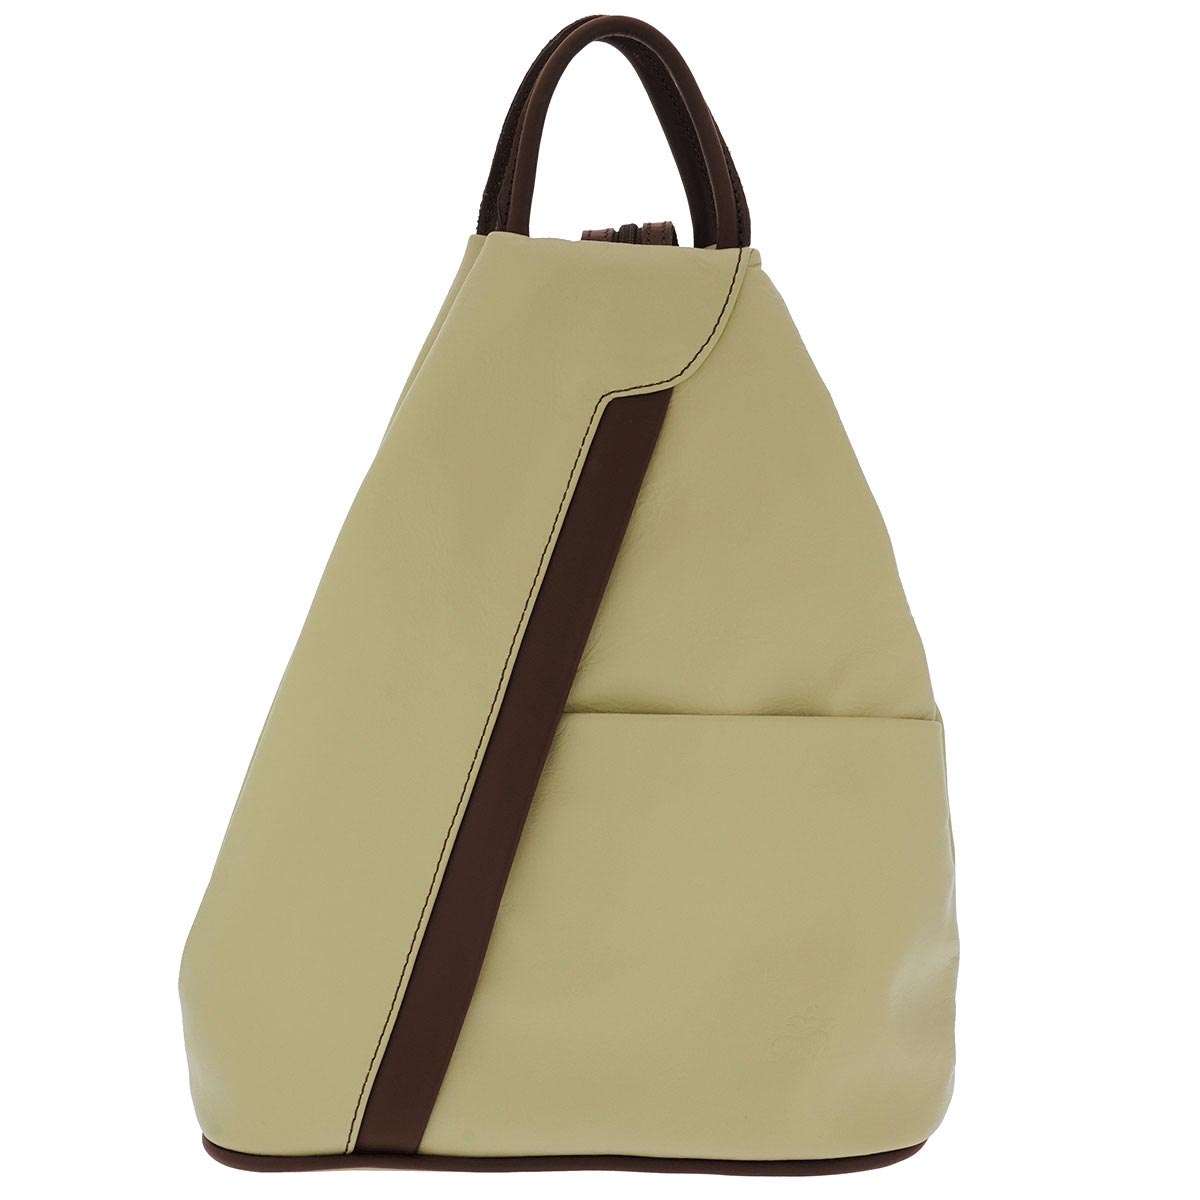 Fioretta Italian Genuine Leather Top Handle Backpack Purse Shoulder Bag Handbag Rucksack For Women - Beige Brown